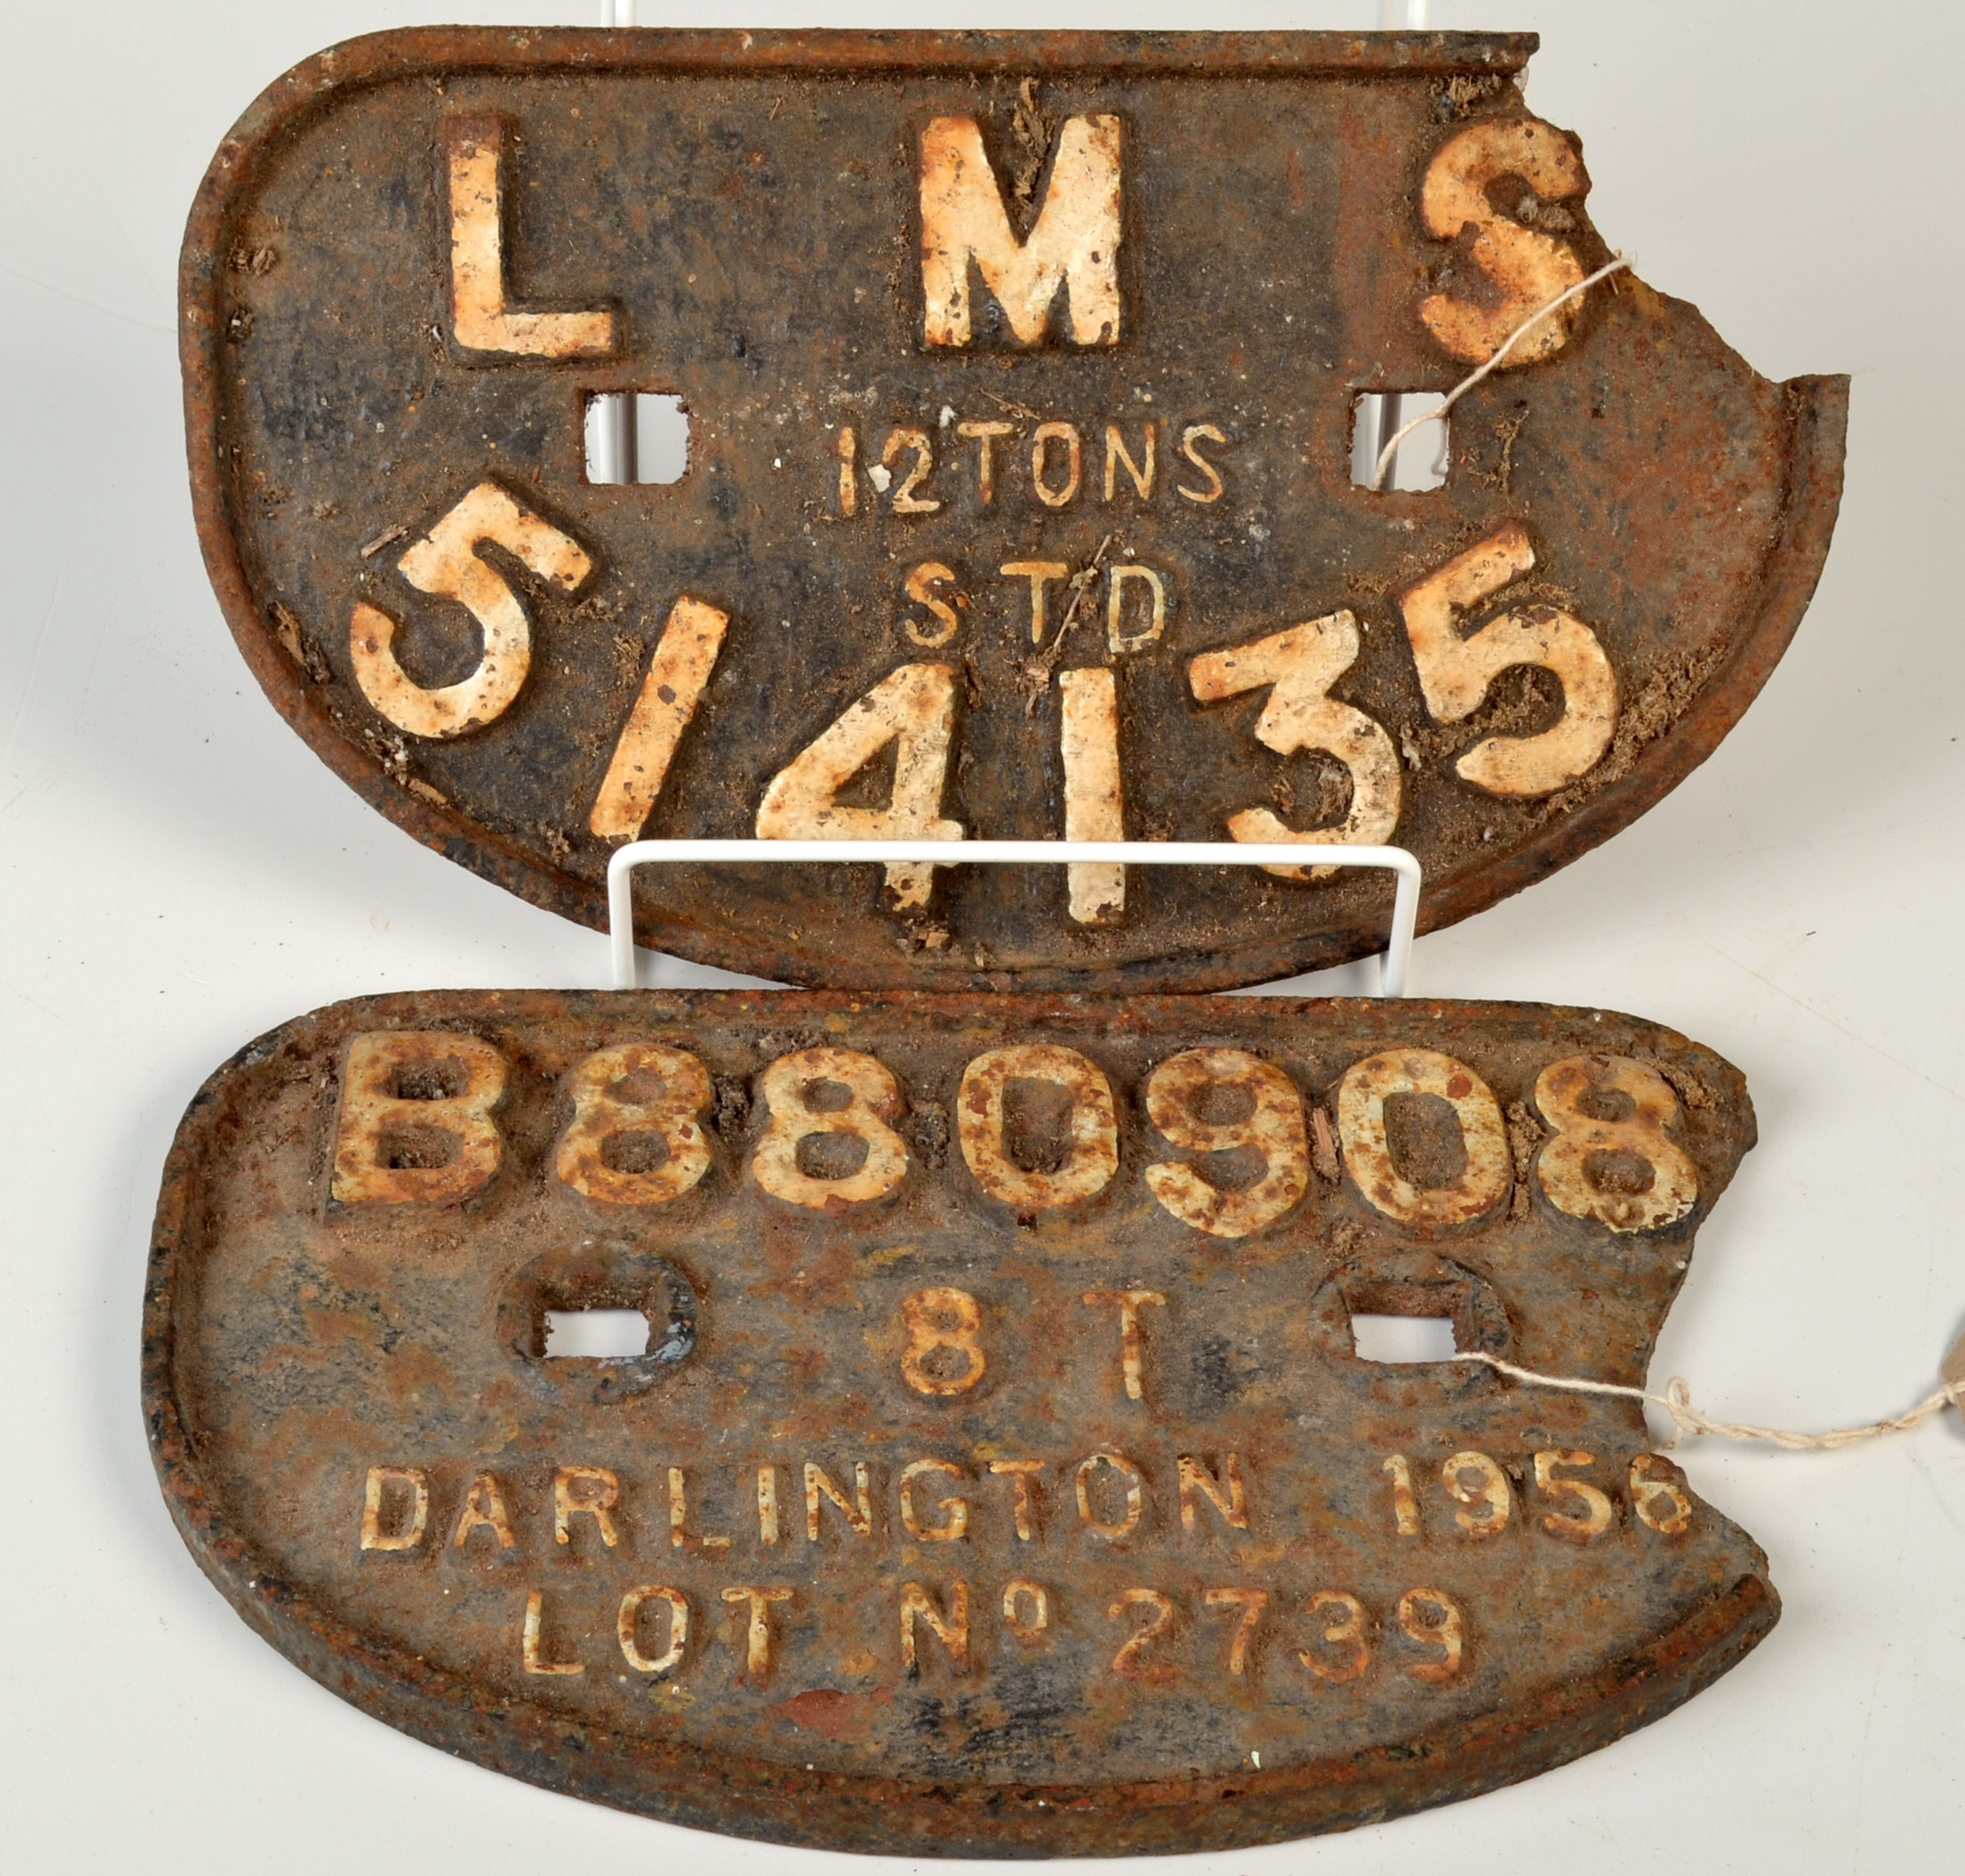 An L.M.S. cast iron wagon plate, 12 tonnes STD.